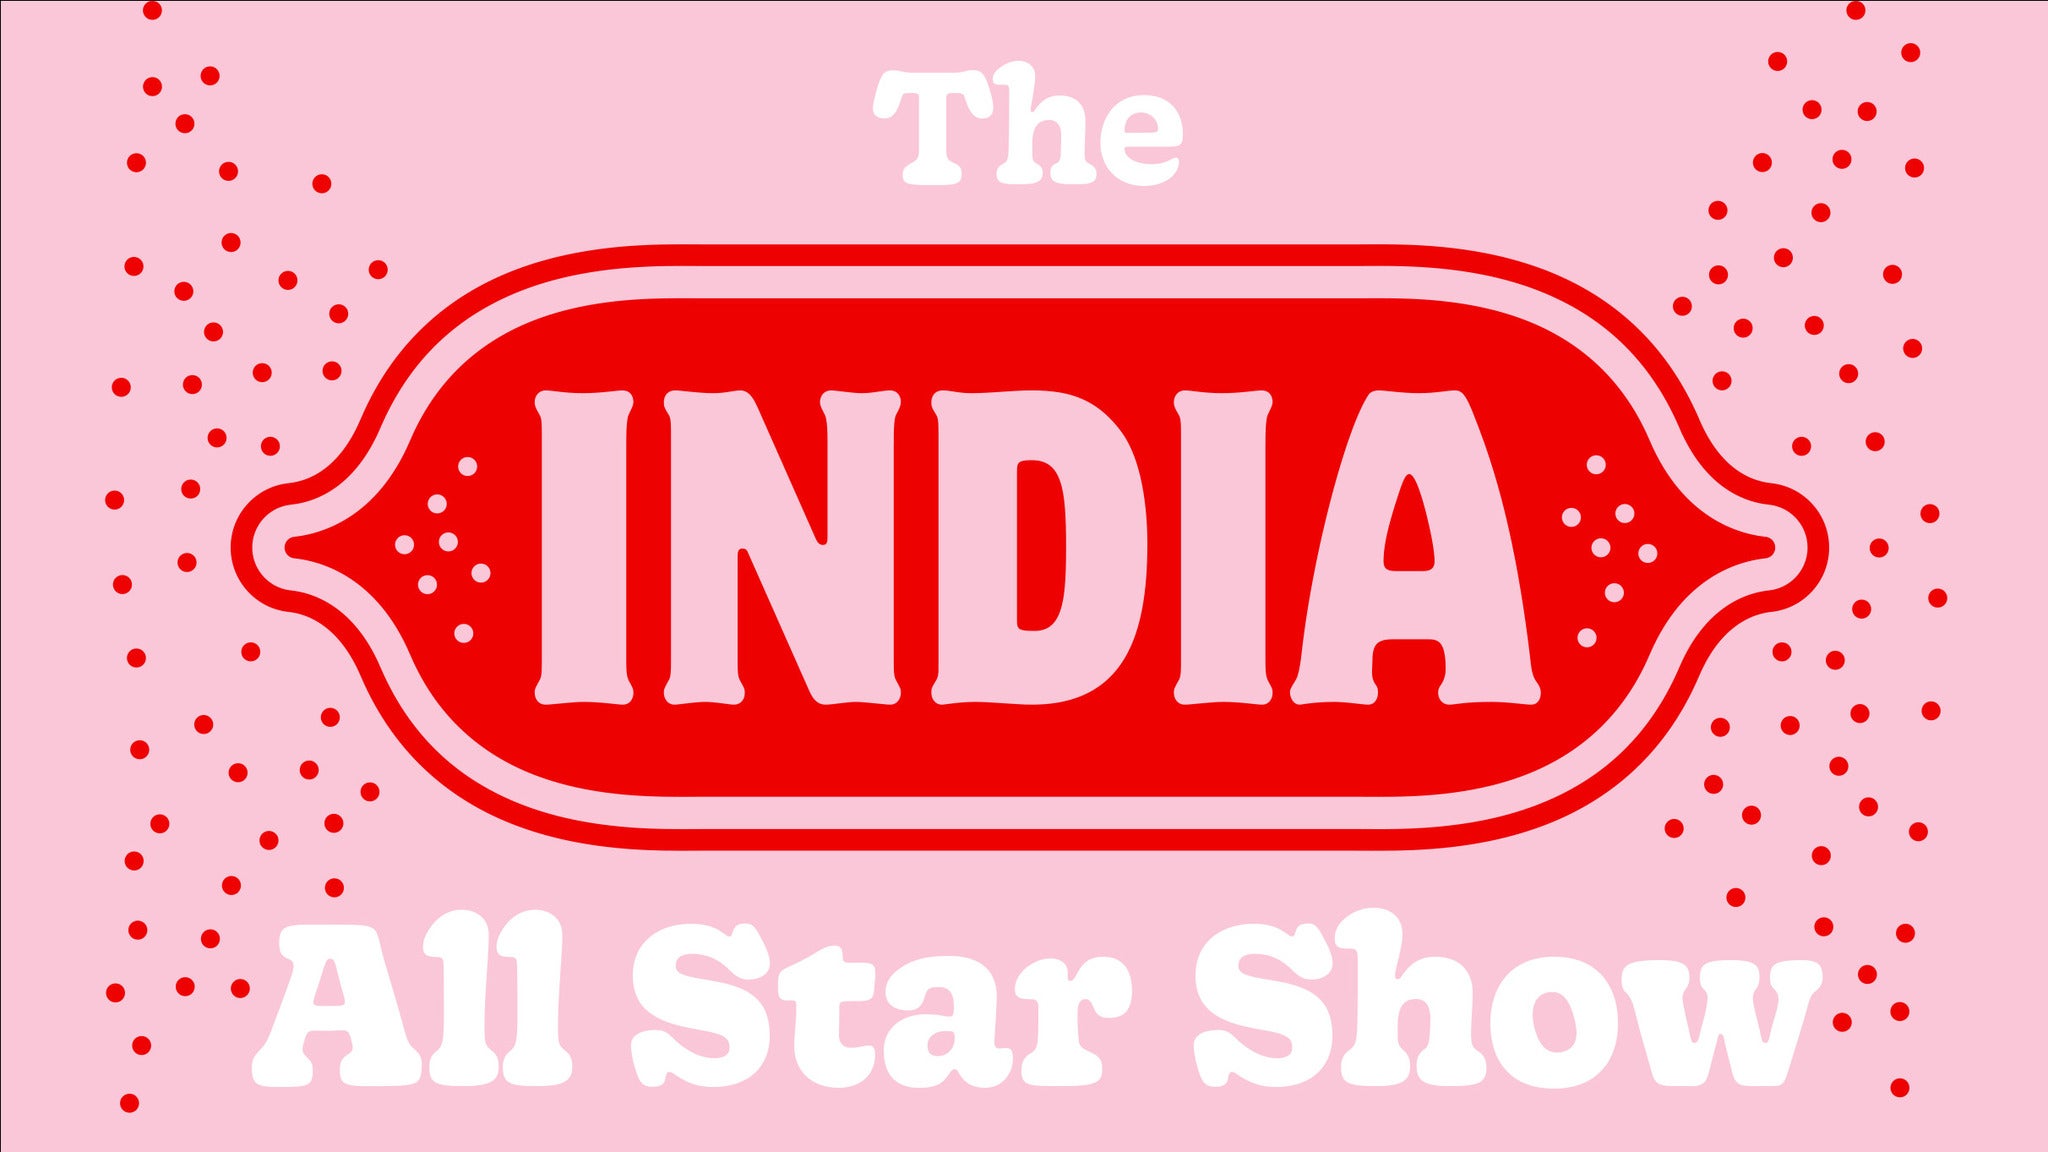 The India All Star Show presale information on freepresalepasswords.com